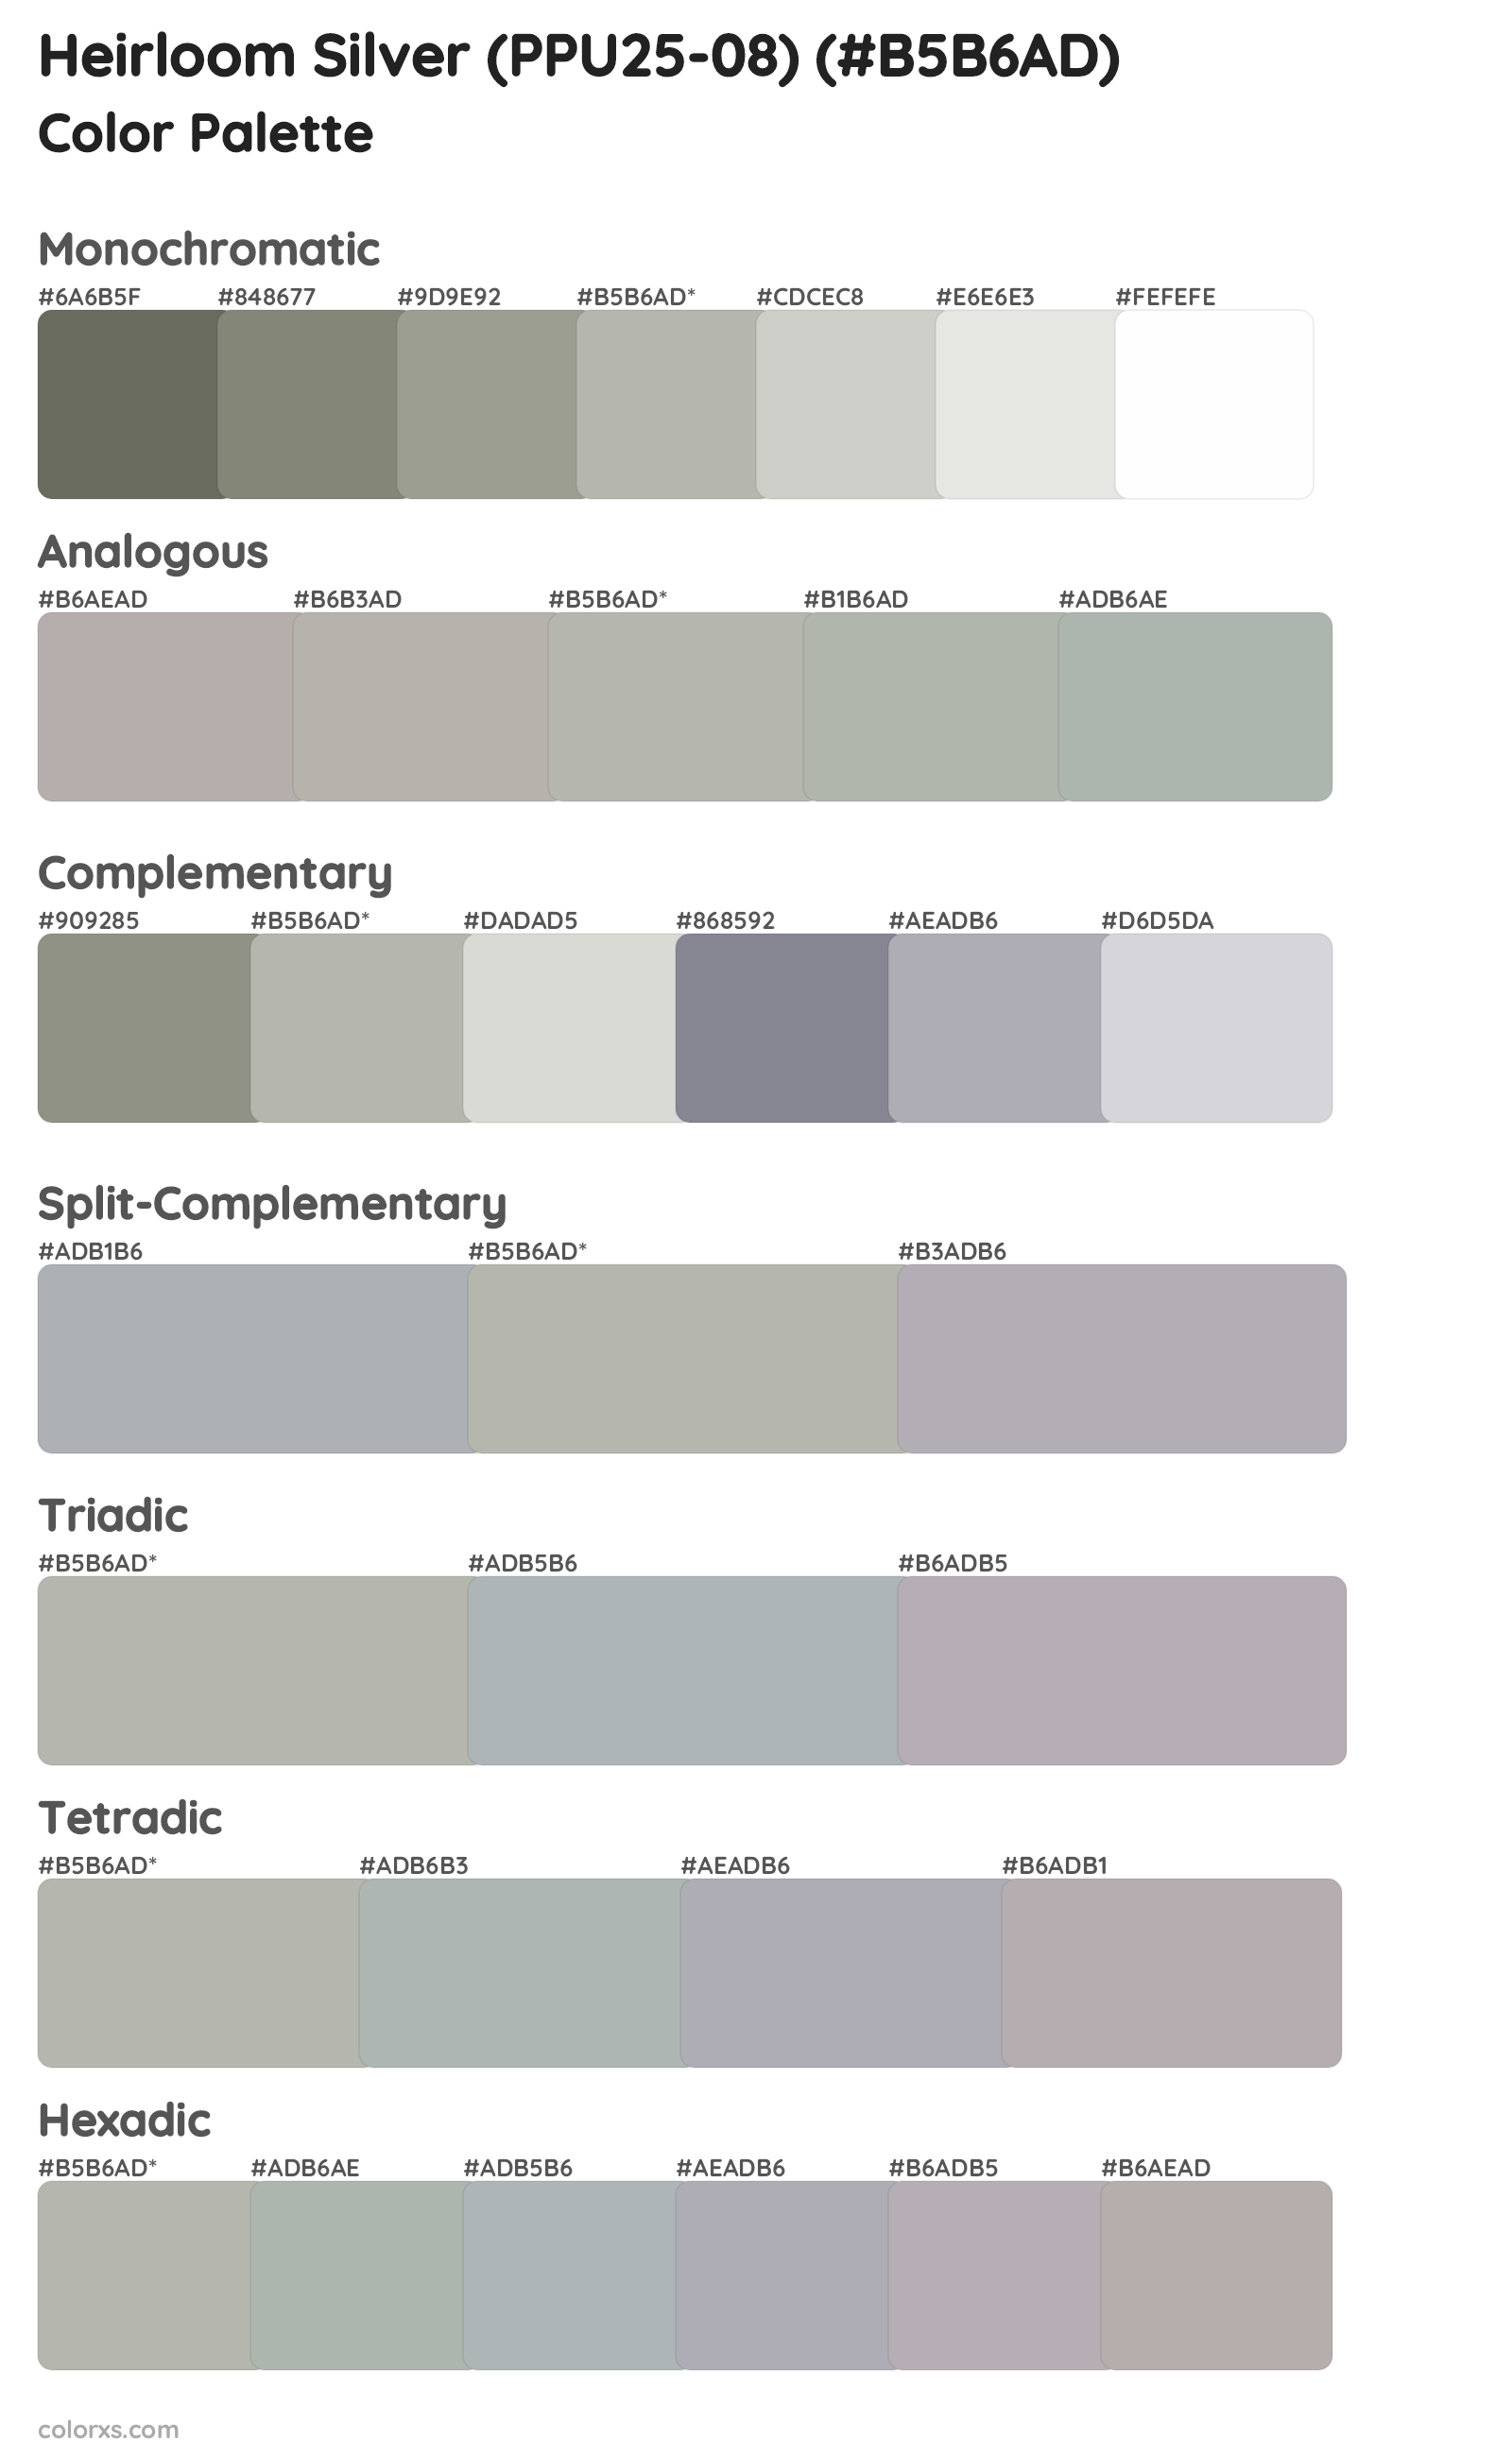 Heirloom Silver (PPU25-08) Color Scheme Palettes